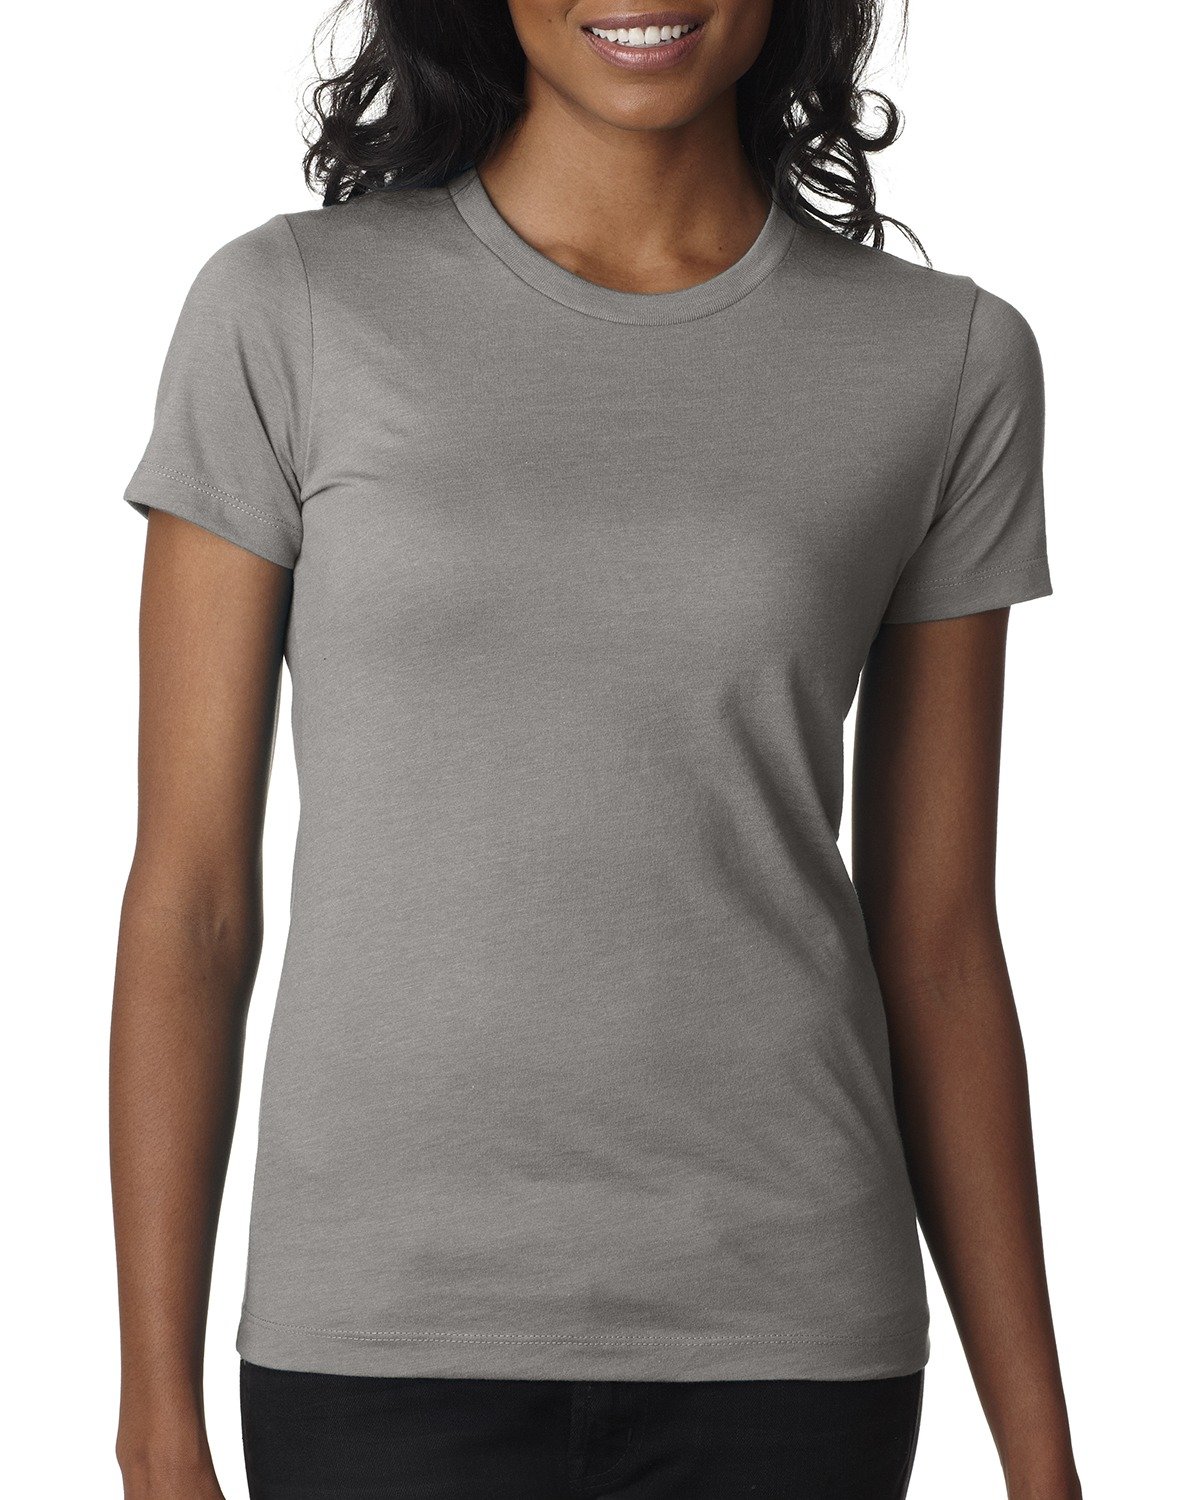 Next Level Apparel Ladies' CVC T-Shirt STONE GRAY 